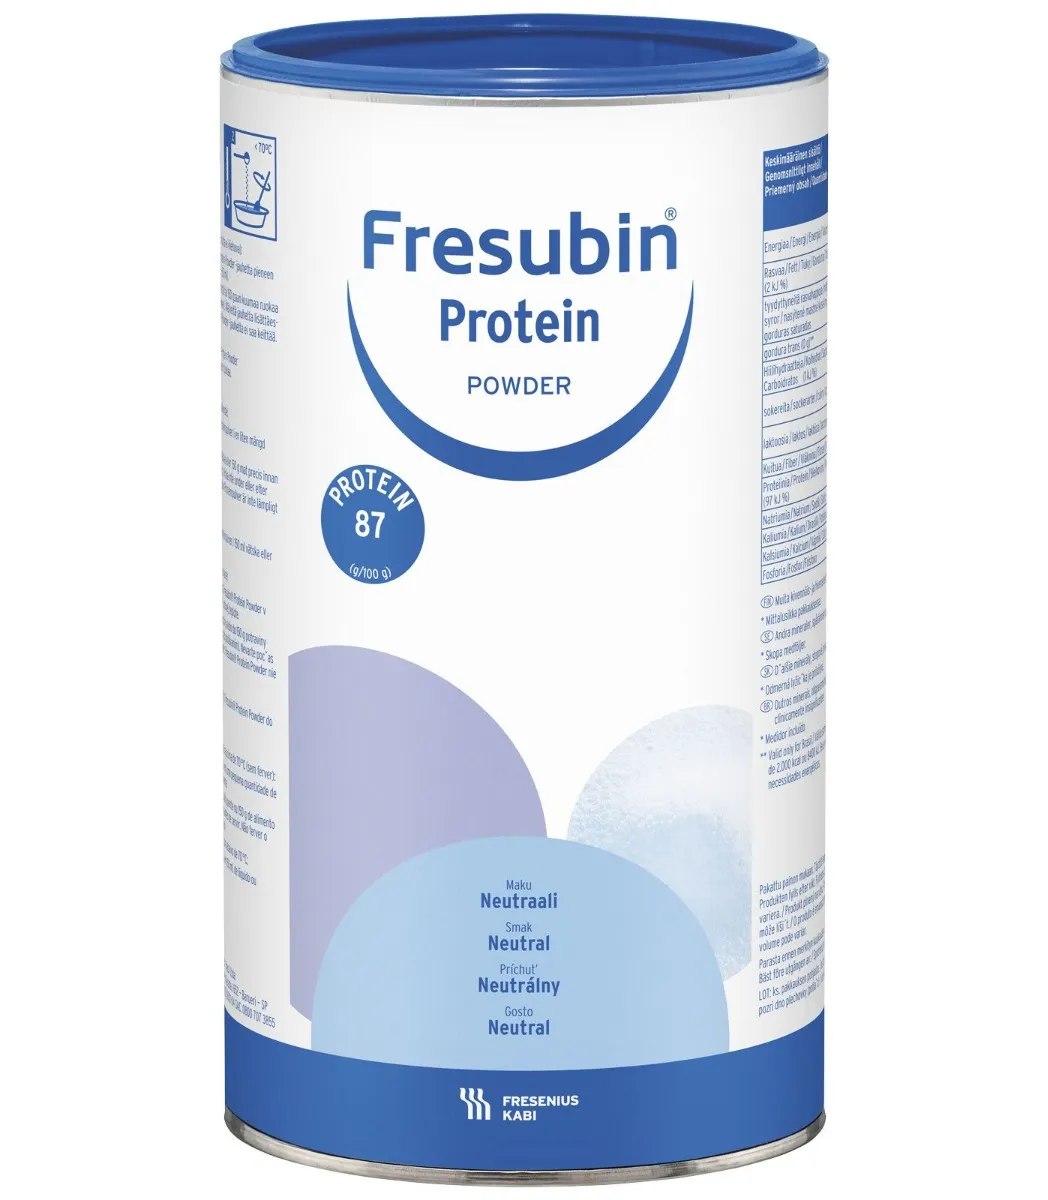 Fresubin Protein POWDER 300 g